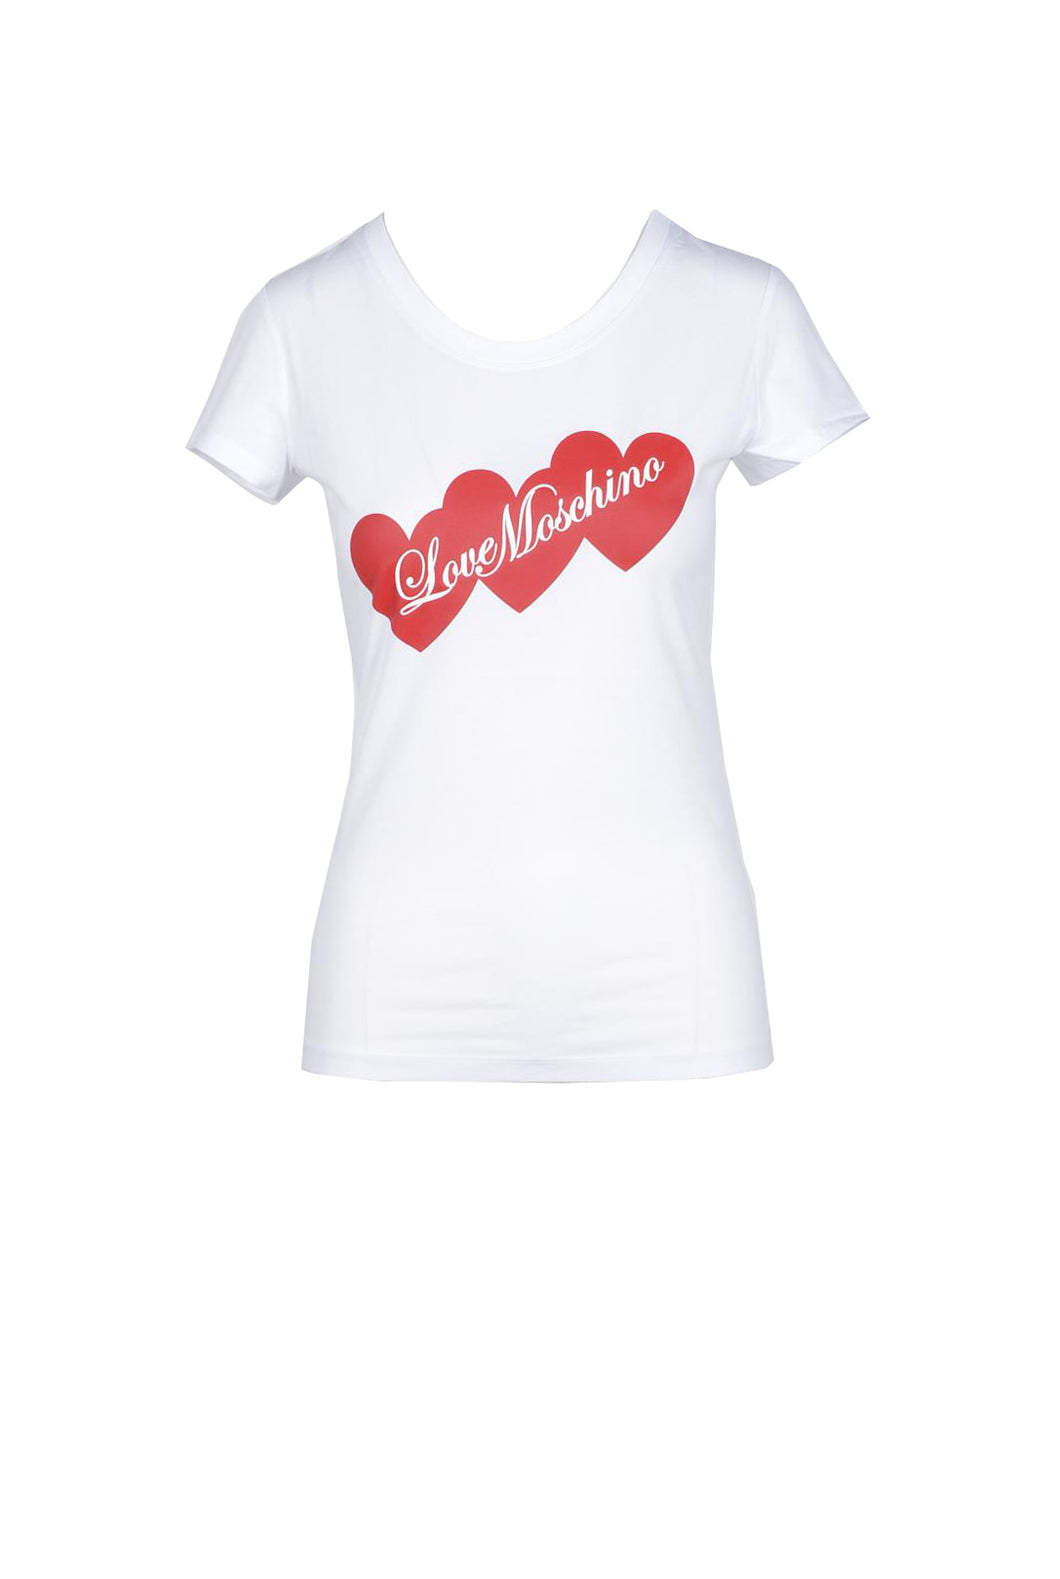 LOVE MOSCHINO White Cotton T-shirt Hearts